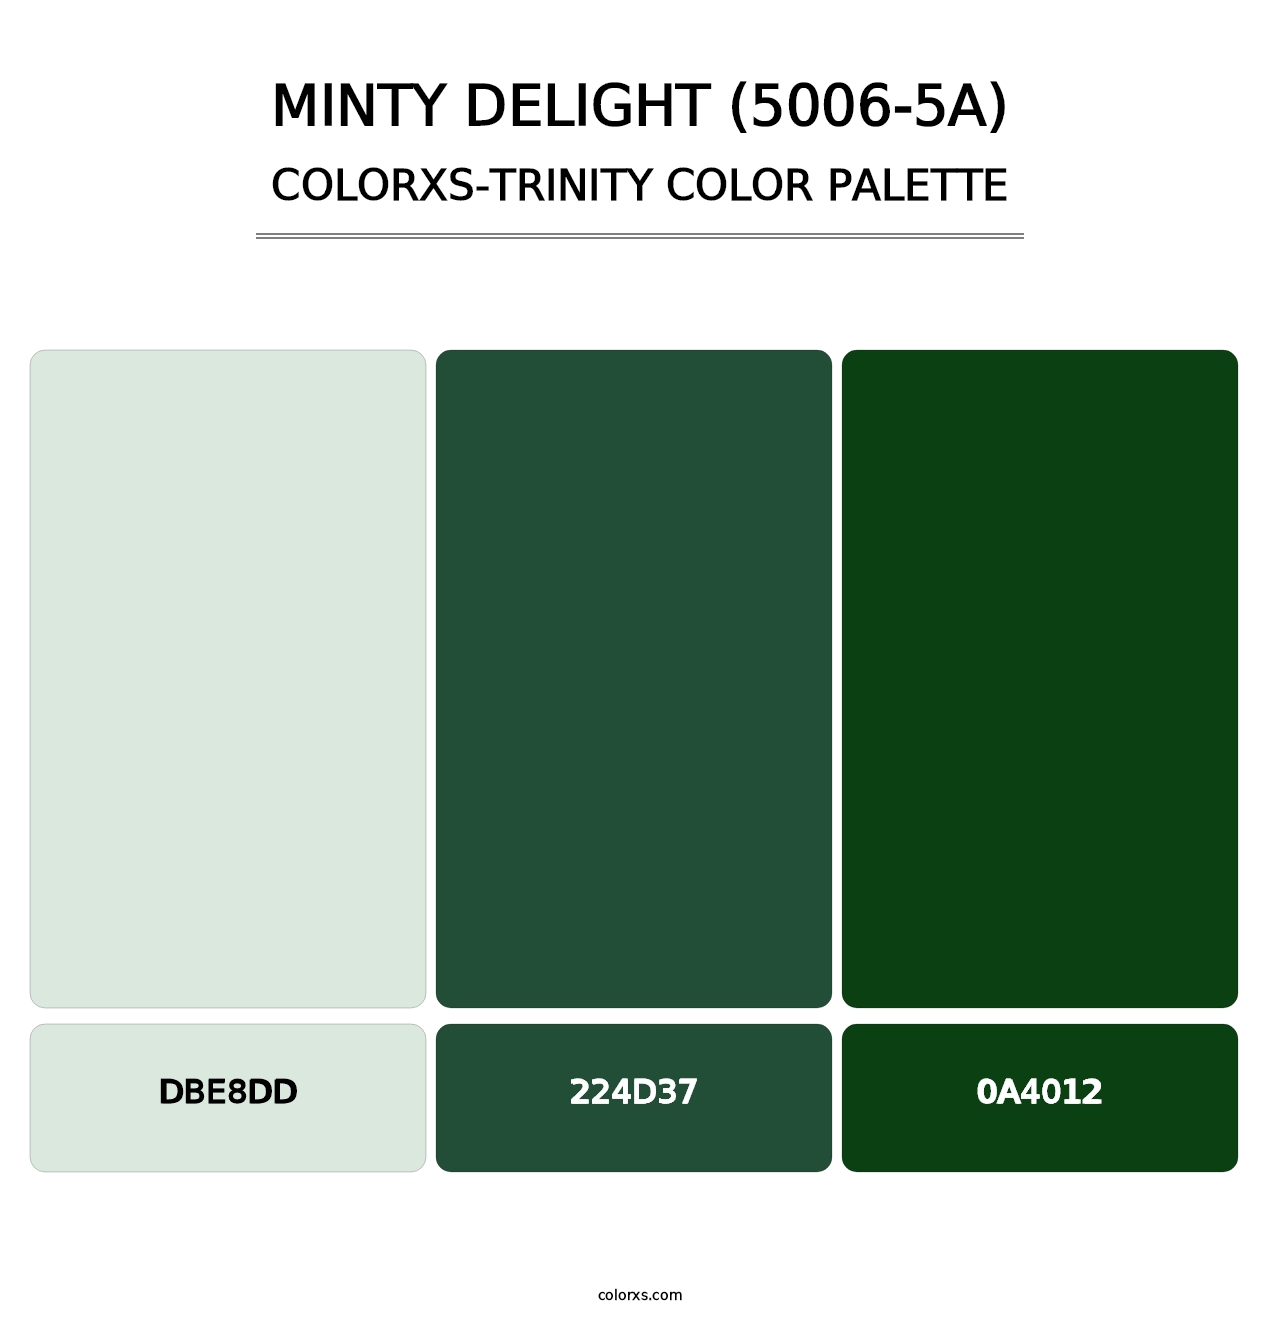 Minty Delight (5006-5A) - Colorxs Trinity Palette